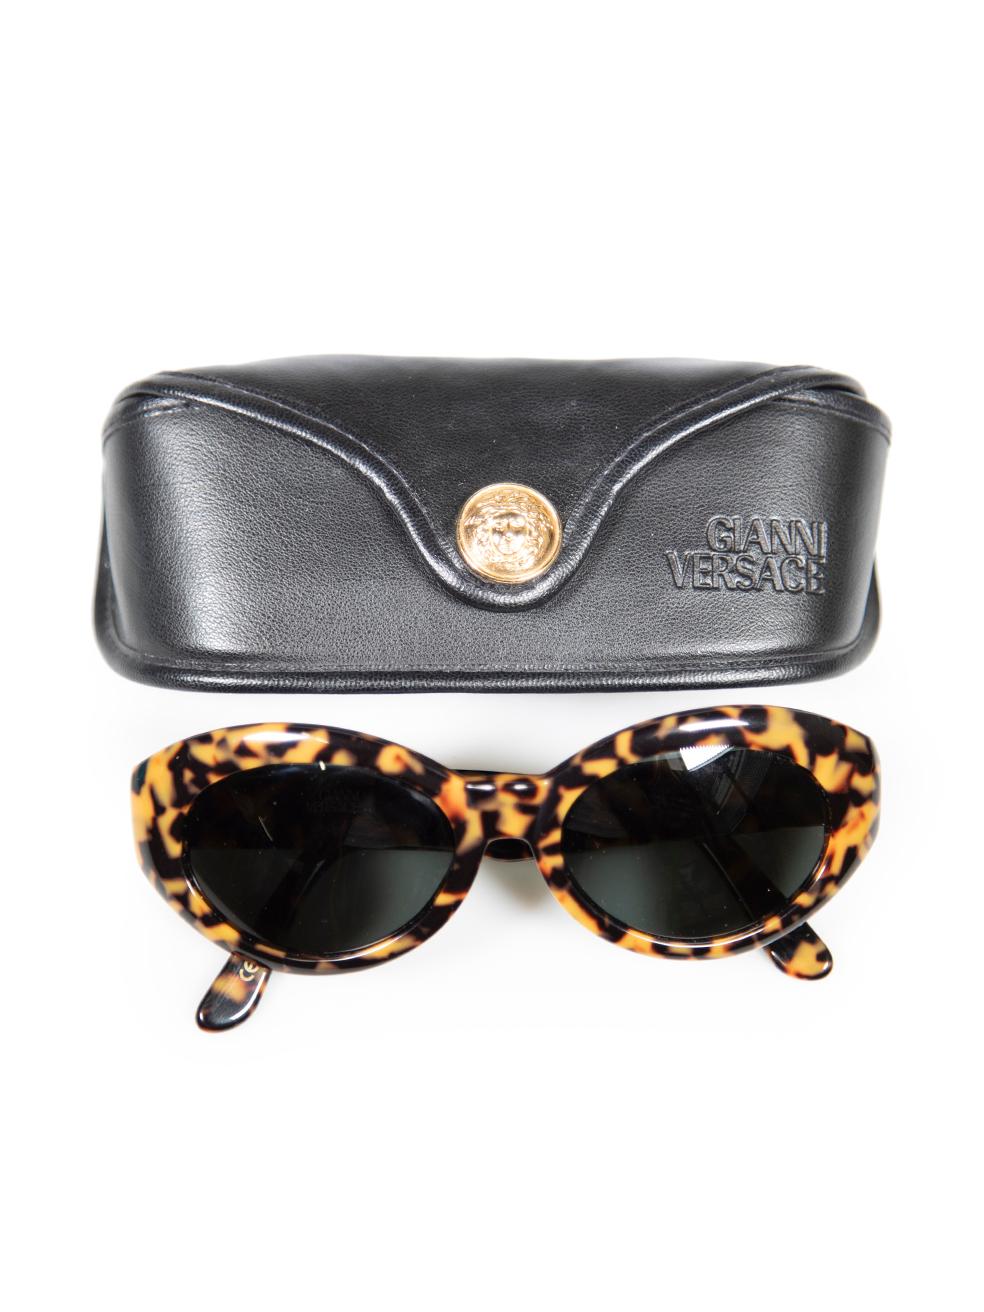 Versace Gianni Versace Brown Studded Medusa Sunglasses For Sale 1